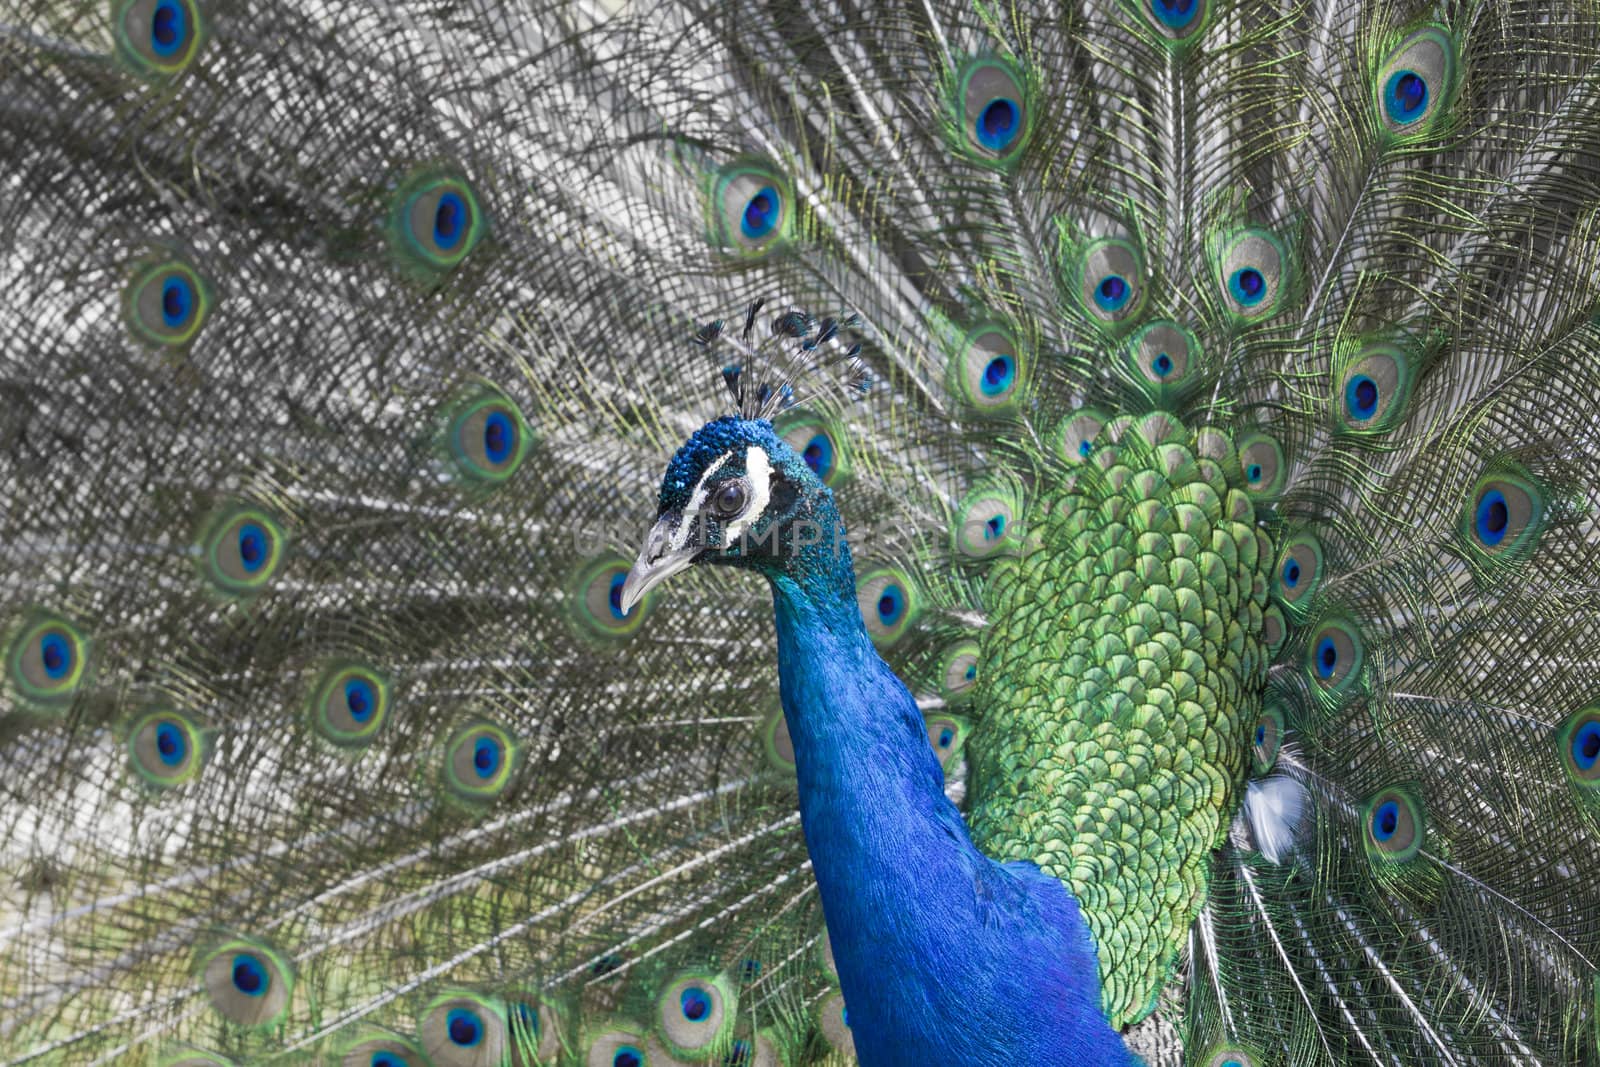 Peacock by Lamarinx